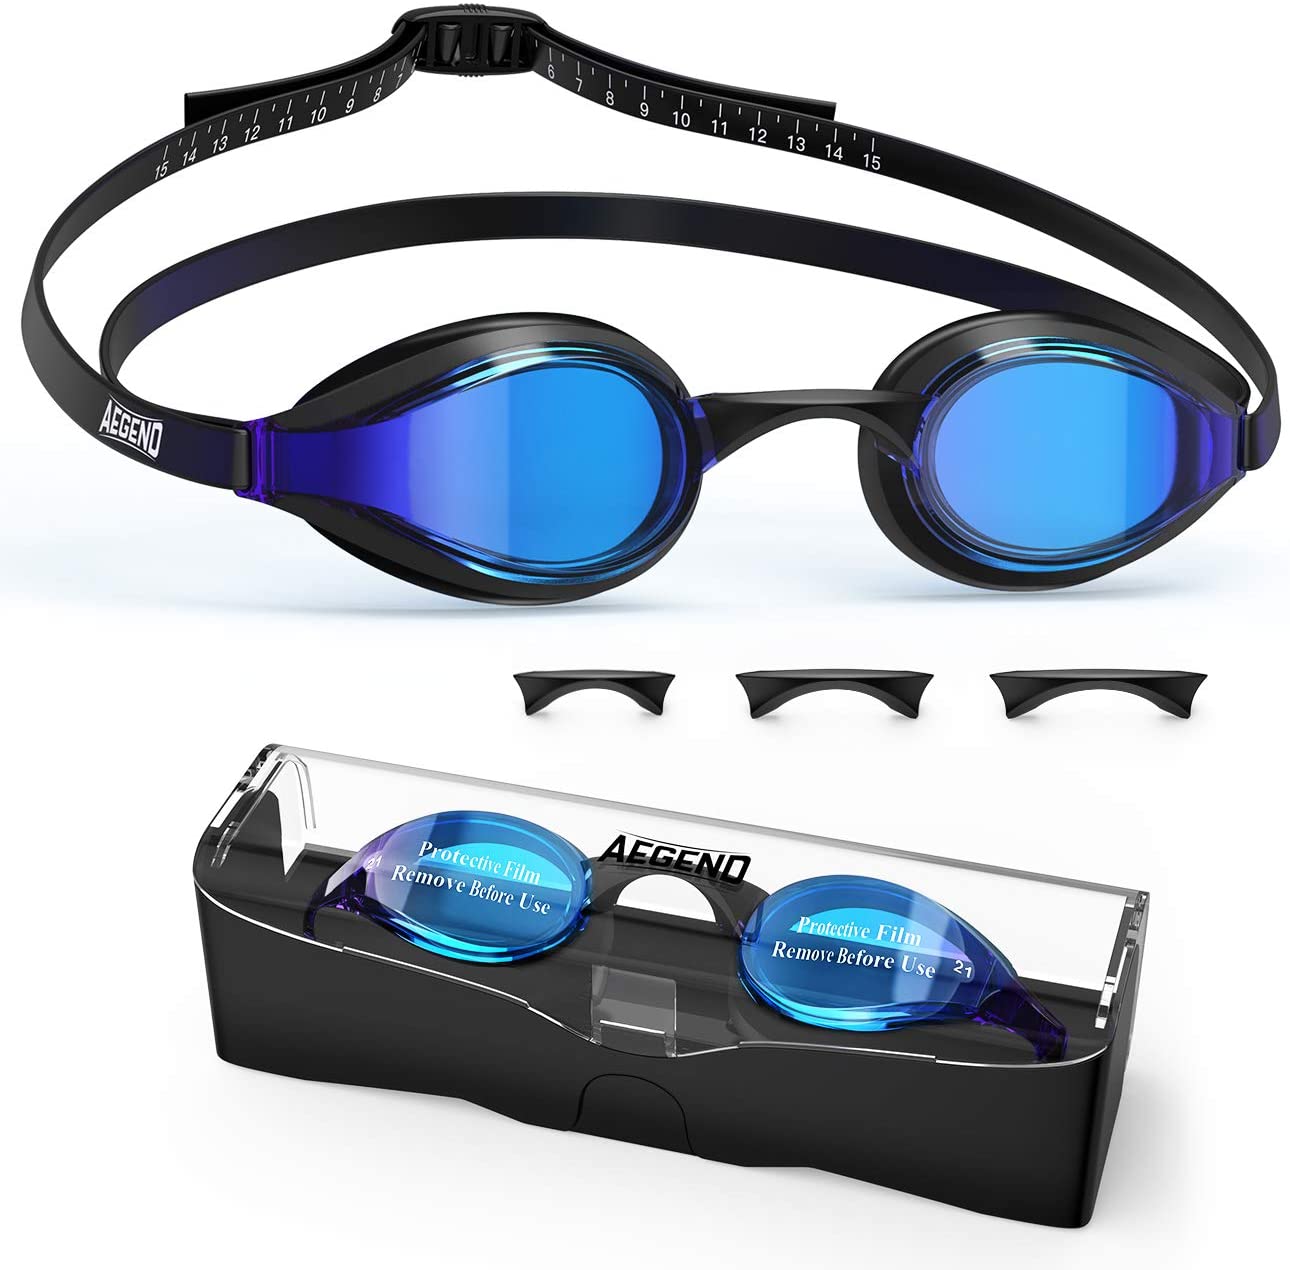 Aegend Swim Goggles, Swimming Goggles with 4 Sizes Nose Bridges UV Protection $7.99 at amazon